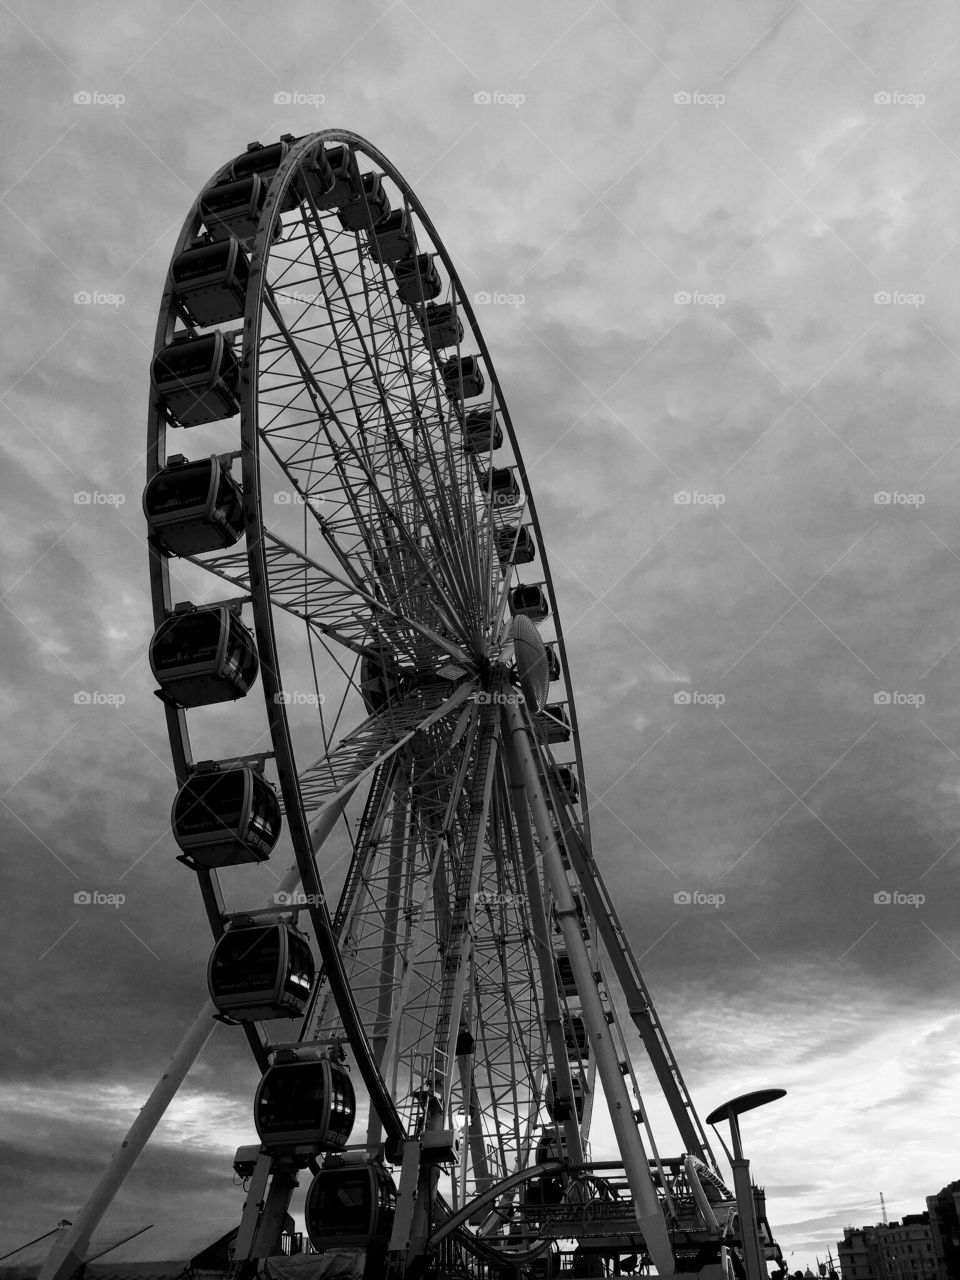 Brighton wheel. Wheel near the pier...